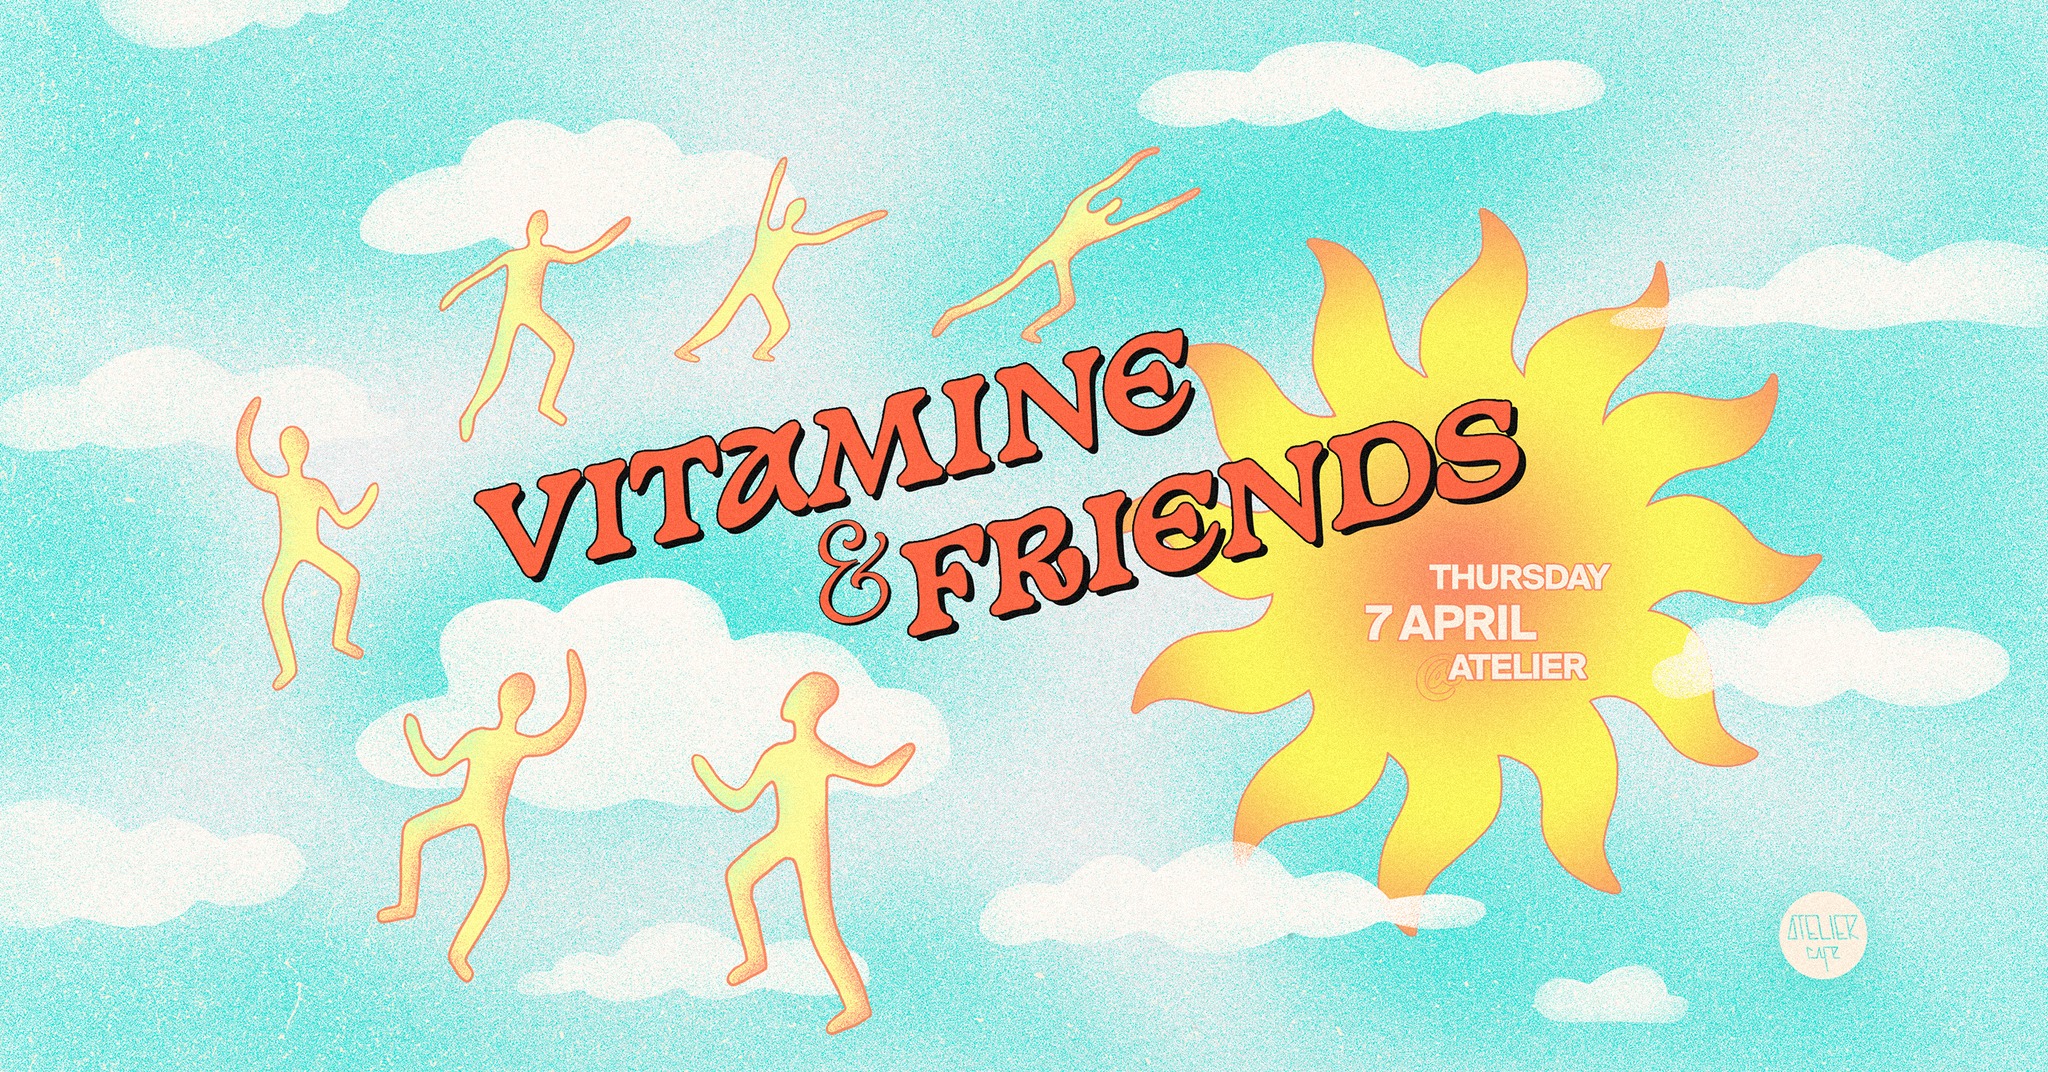 Vitamine & Friends